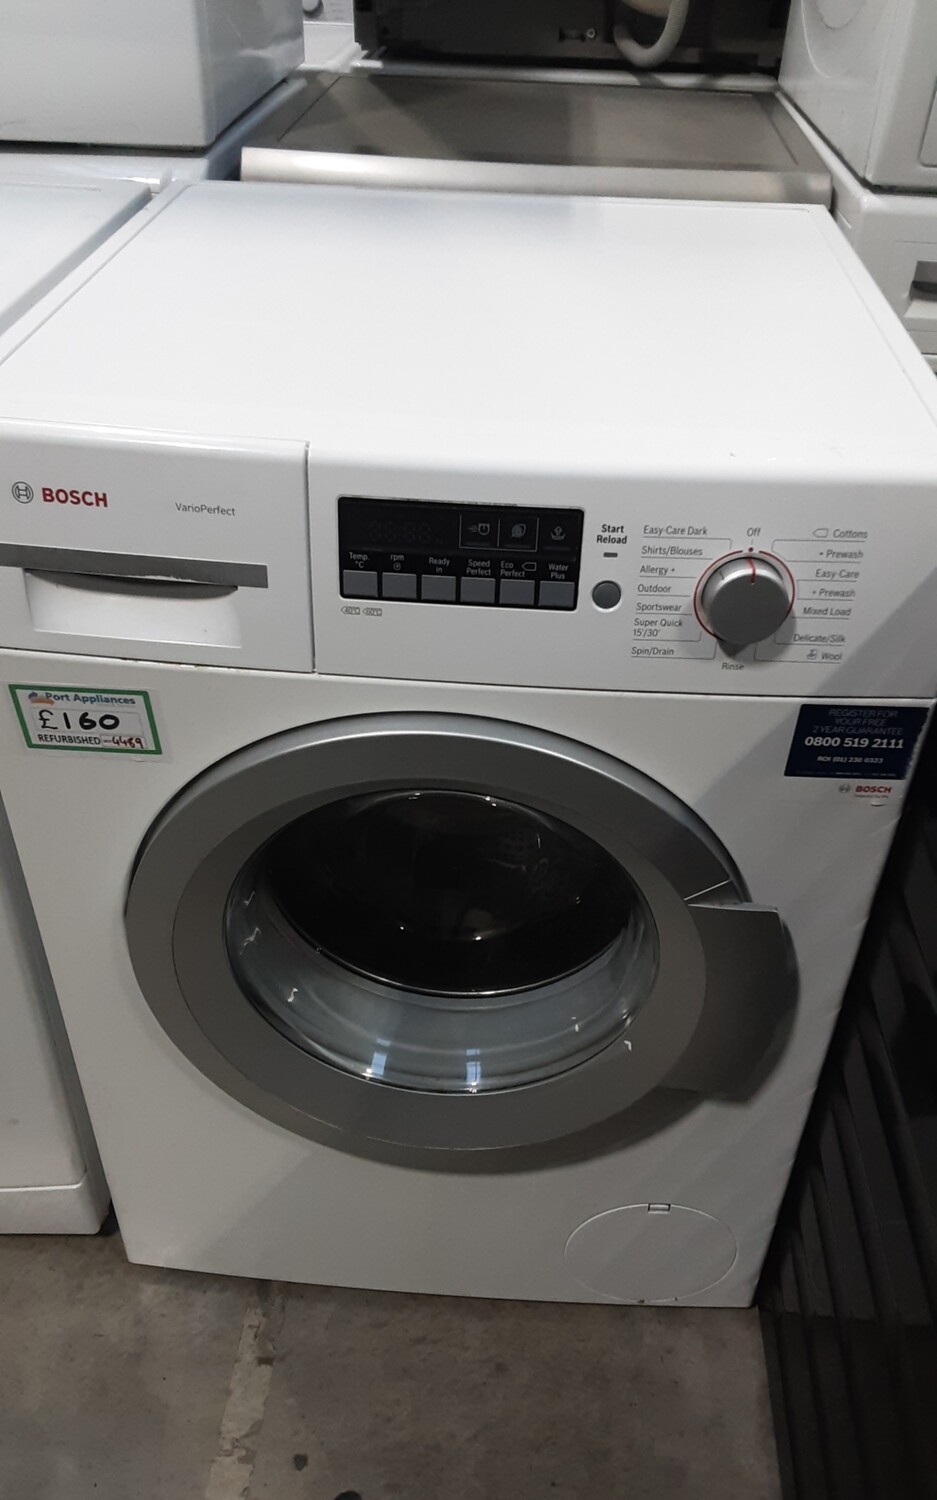 Bosch Varioperfect 8kg Load 1400 Spin Washing Machine - White - Refurbished - 6 Month Guarantee